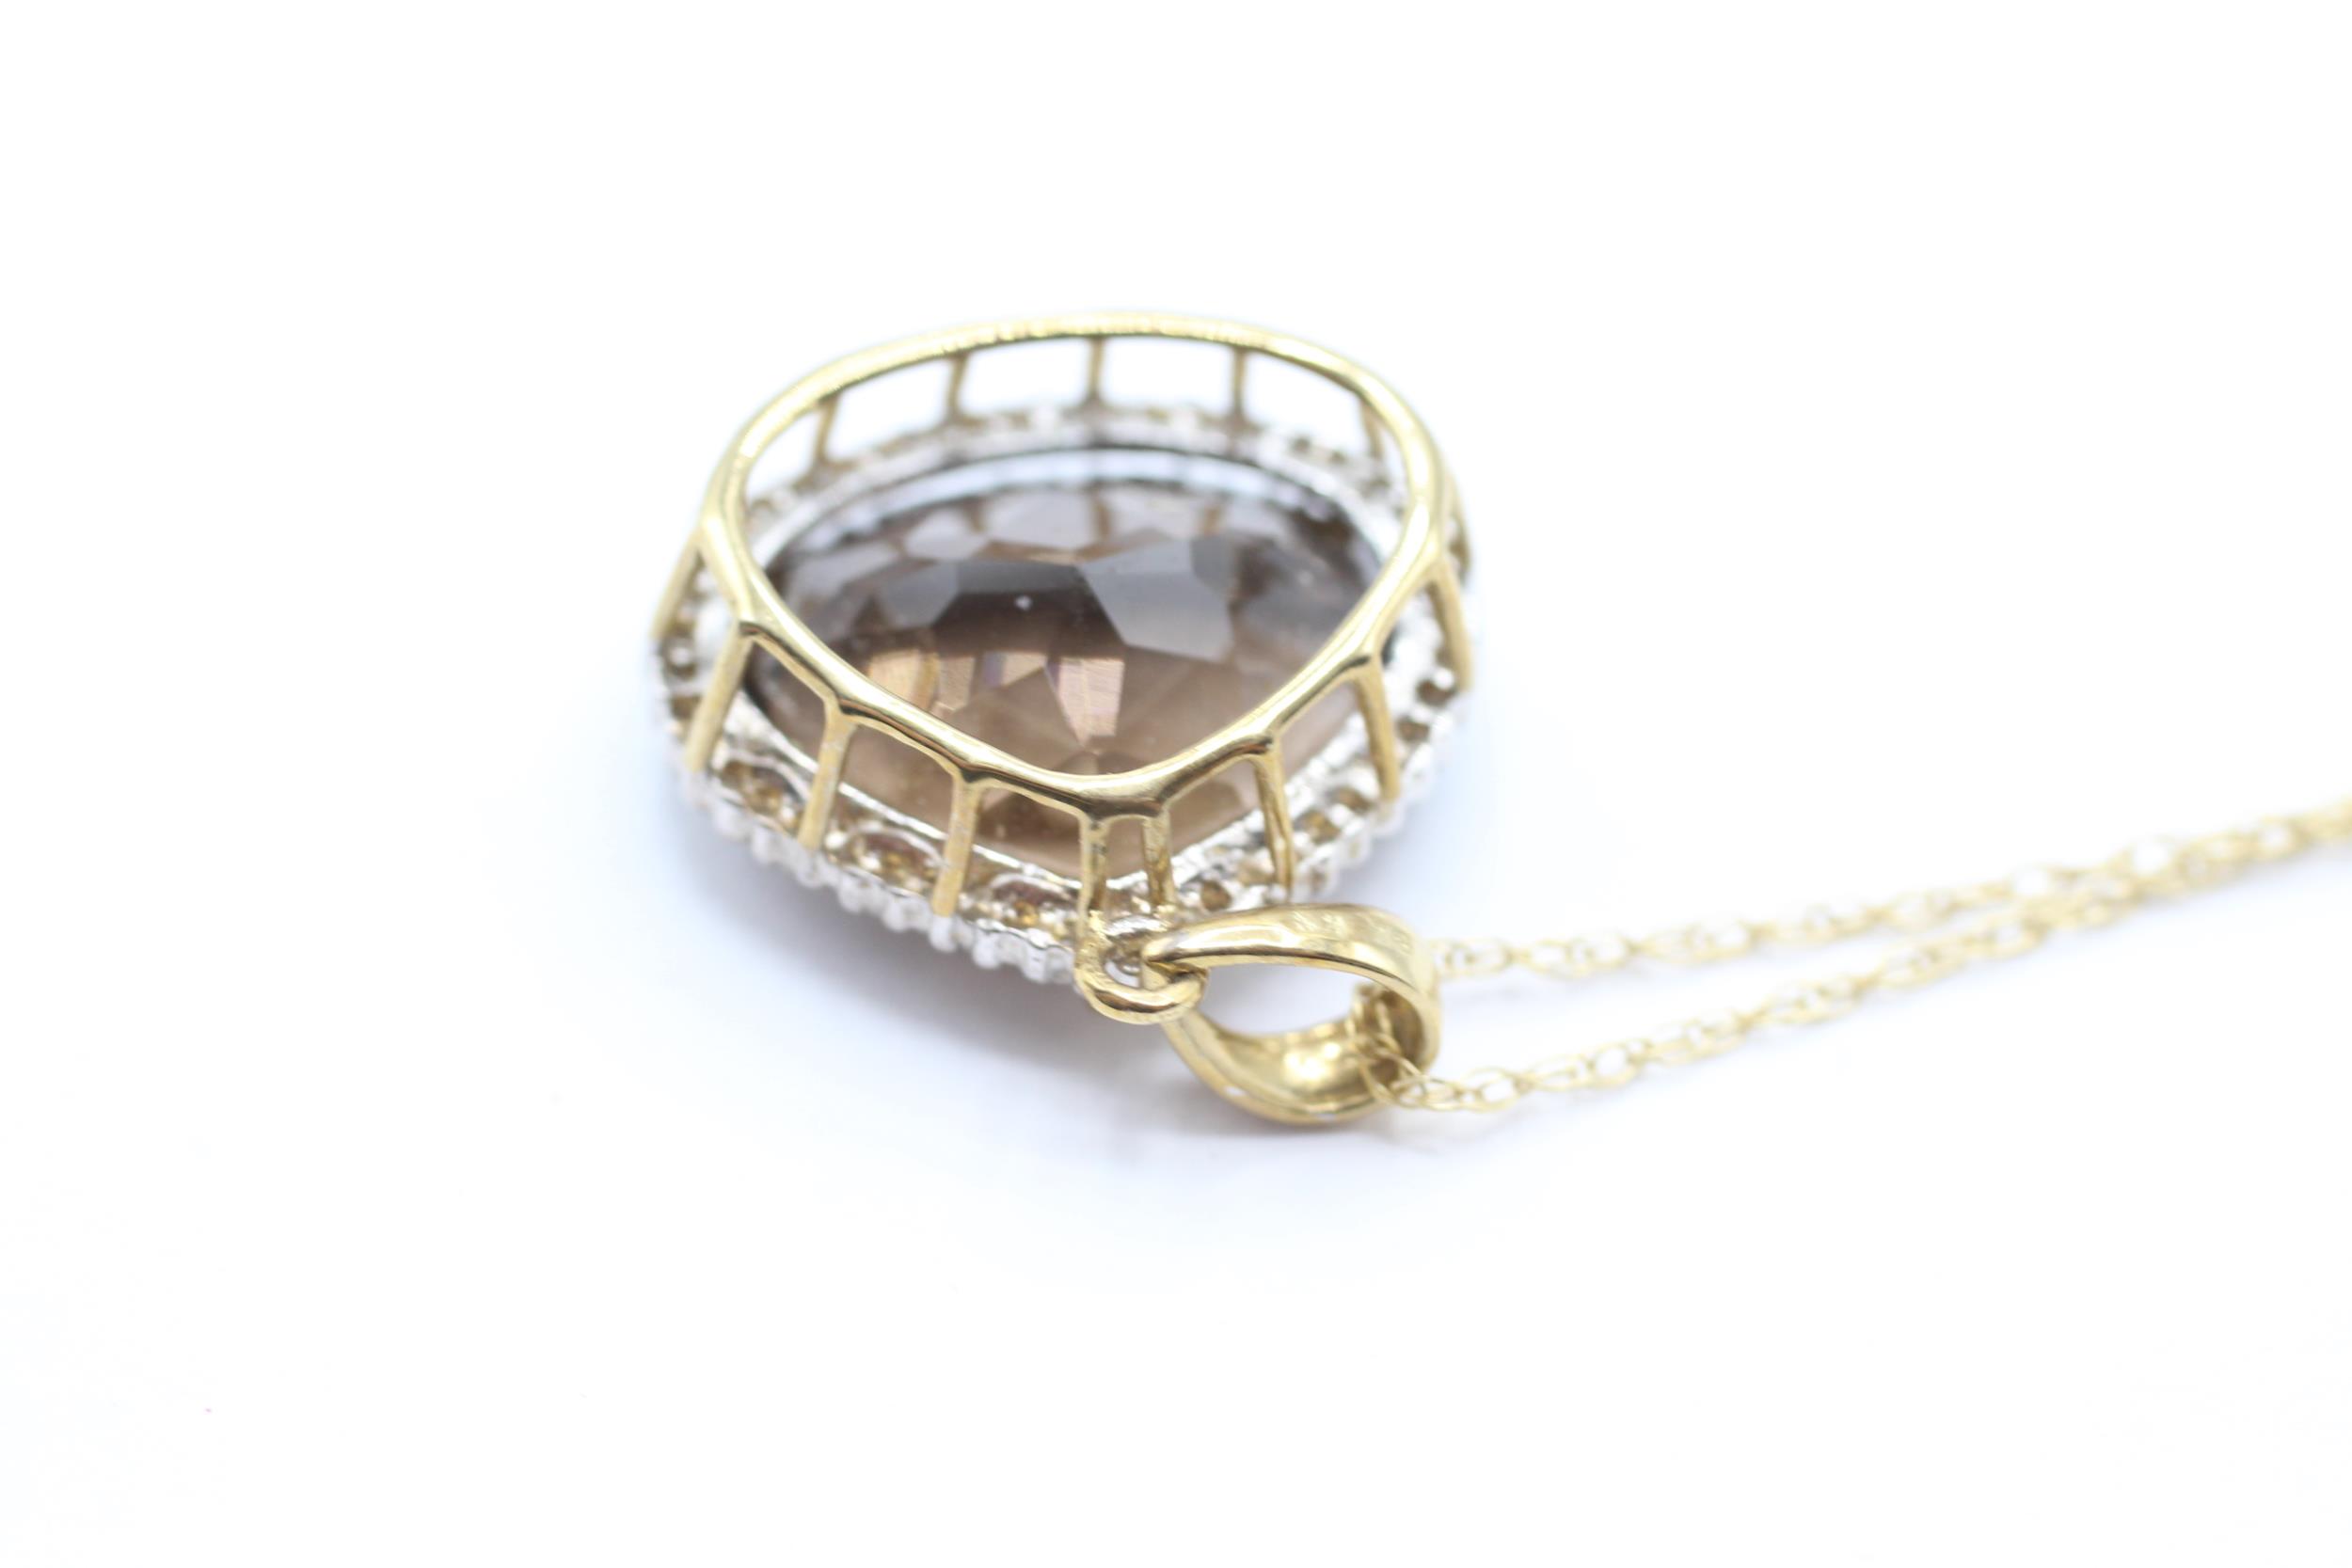 9ct gold pear cut smokey quart and diamond set pendant necklace - 5.3 g - Image 4 of 4